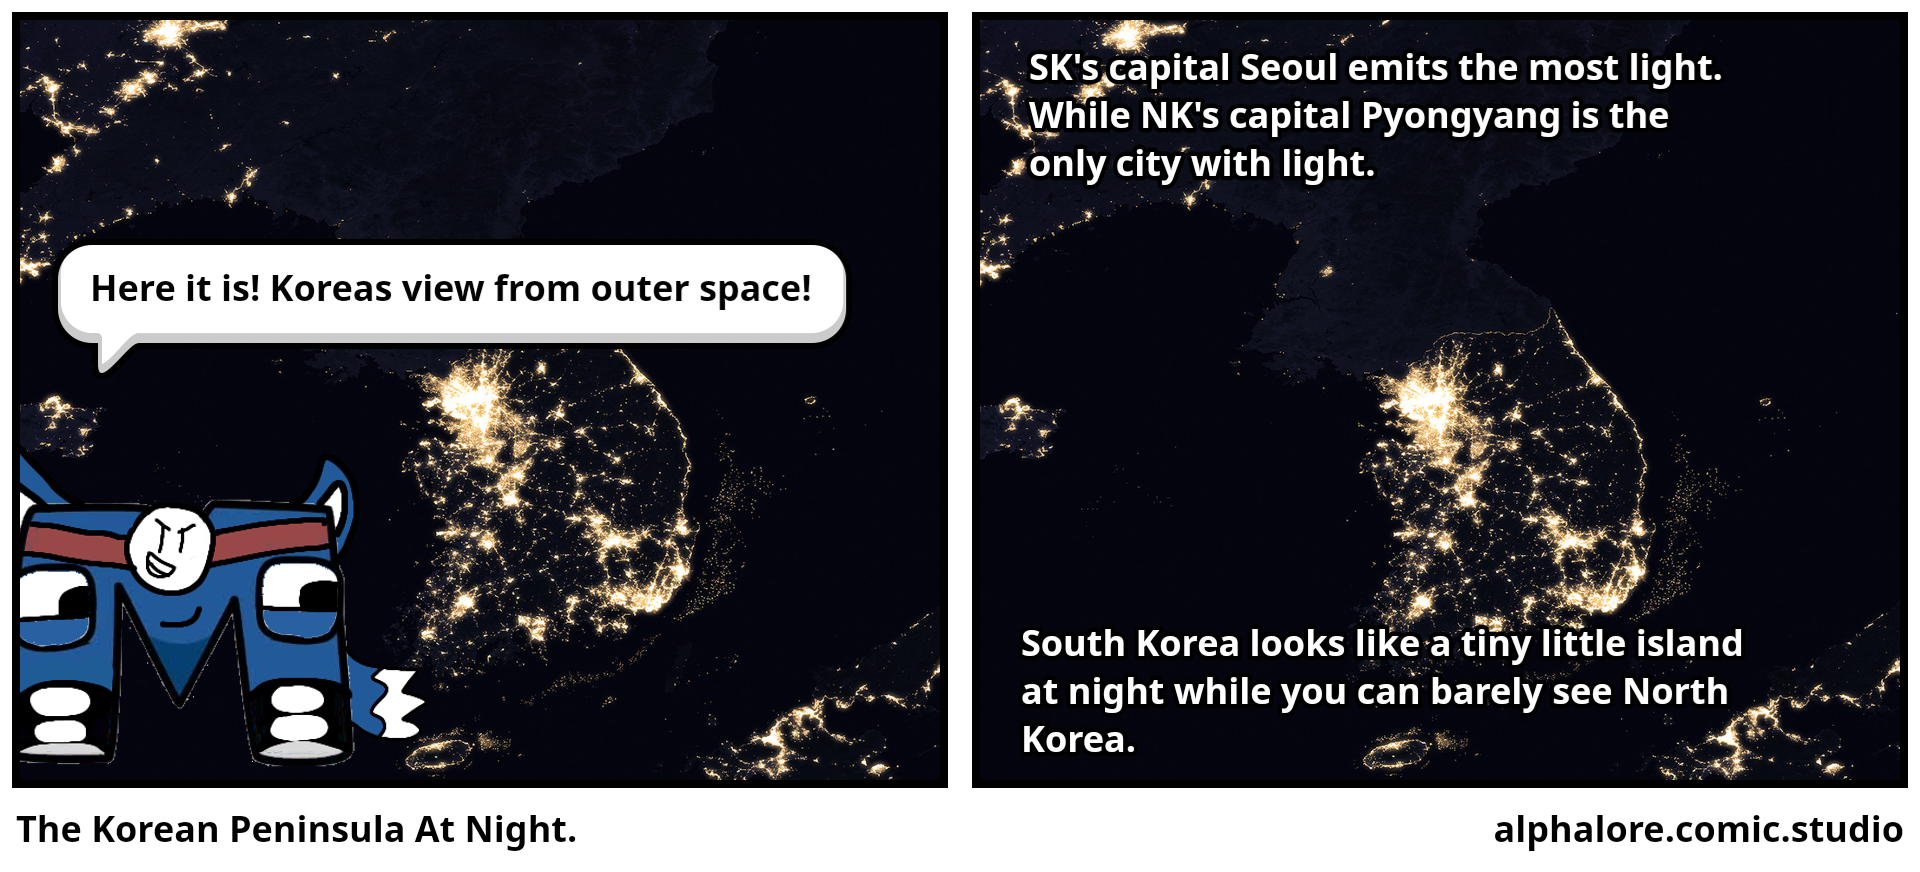 The Korean Peninsula At Night.